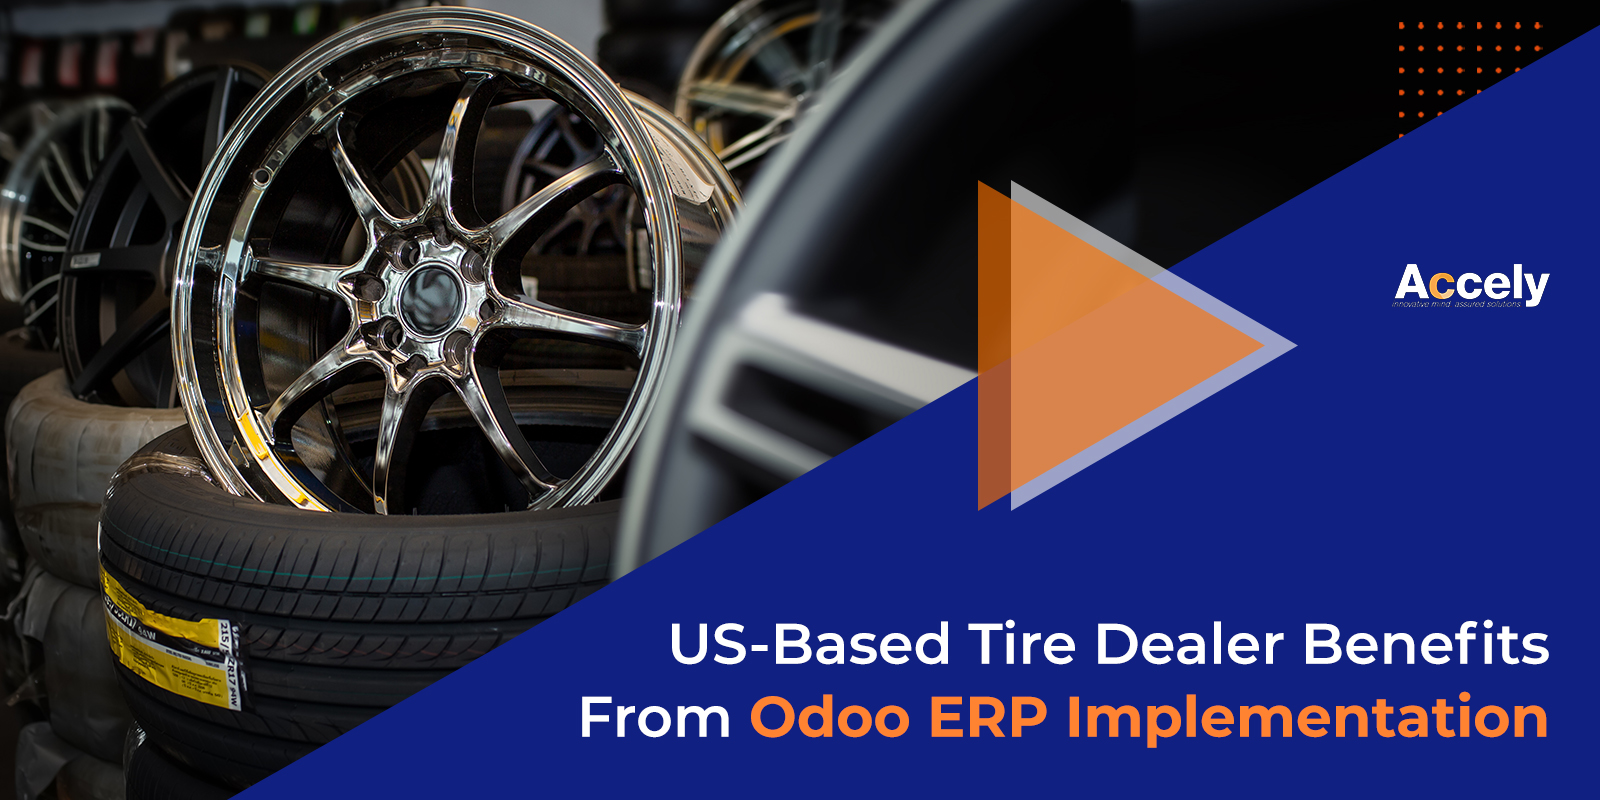 US-Based Tire Dealer Benefits From Odoo ERP Implementation